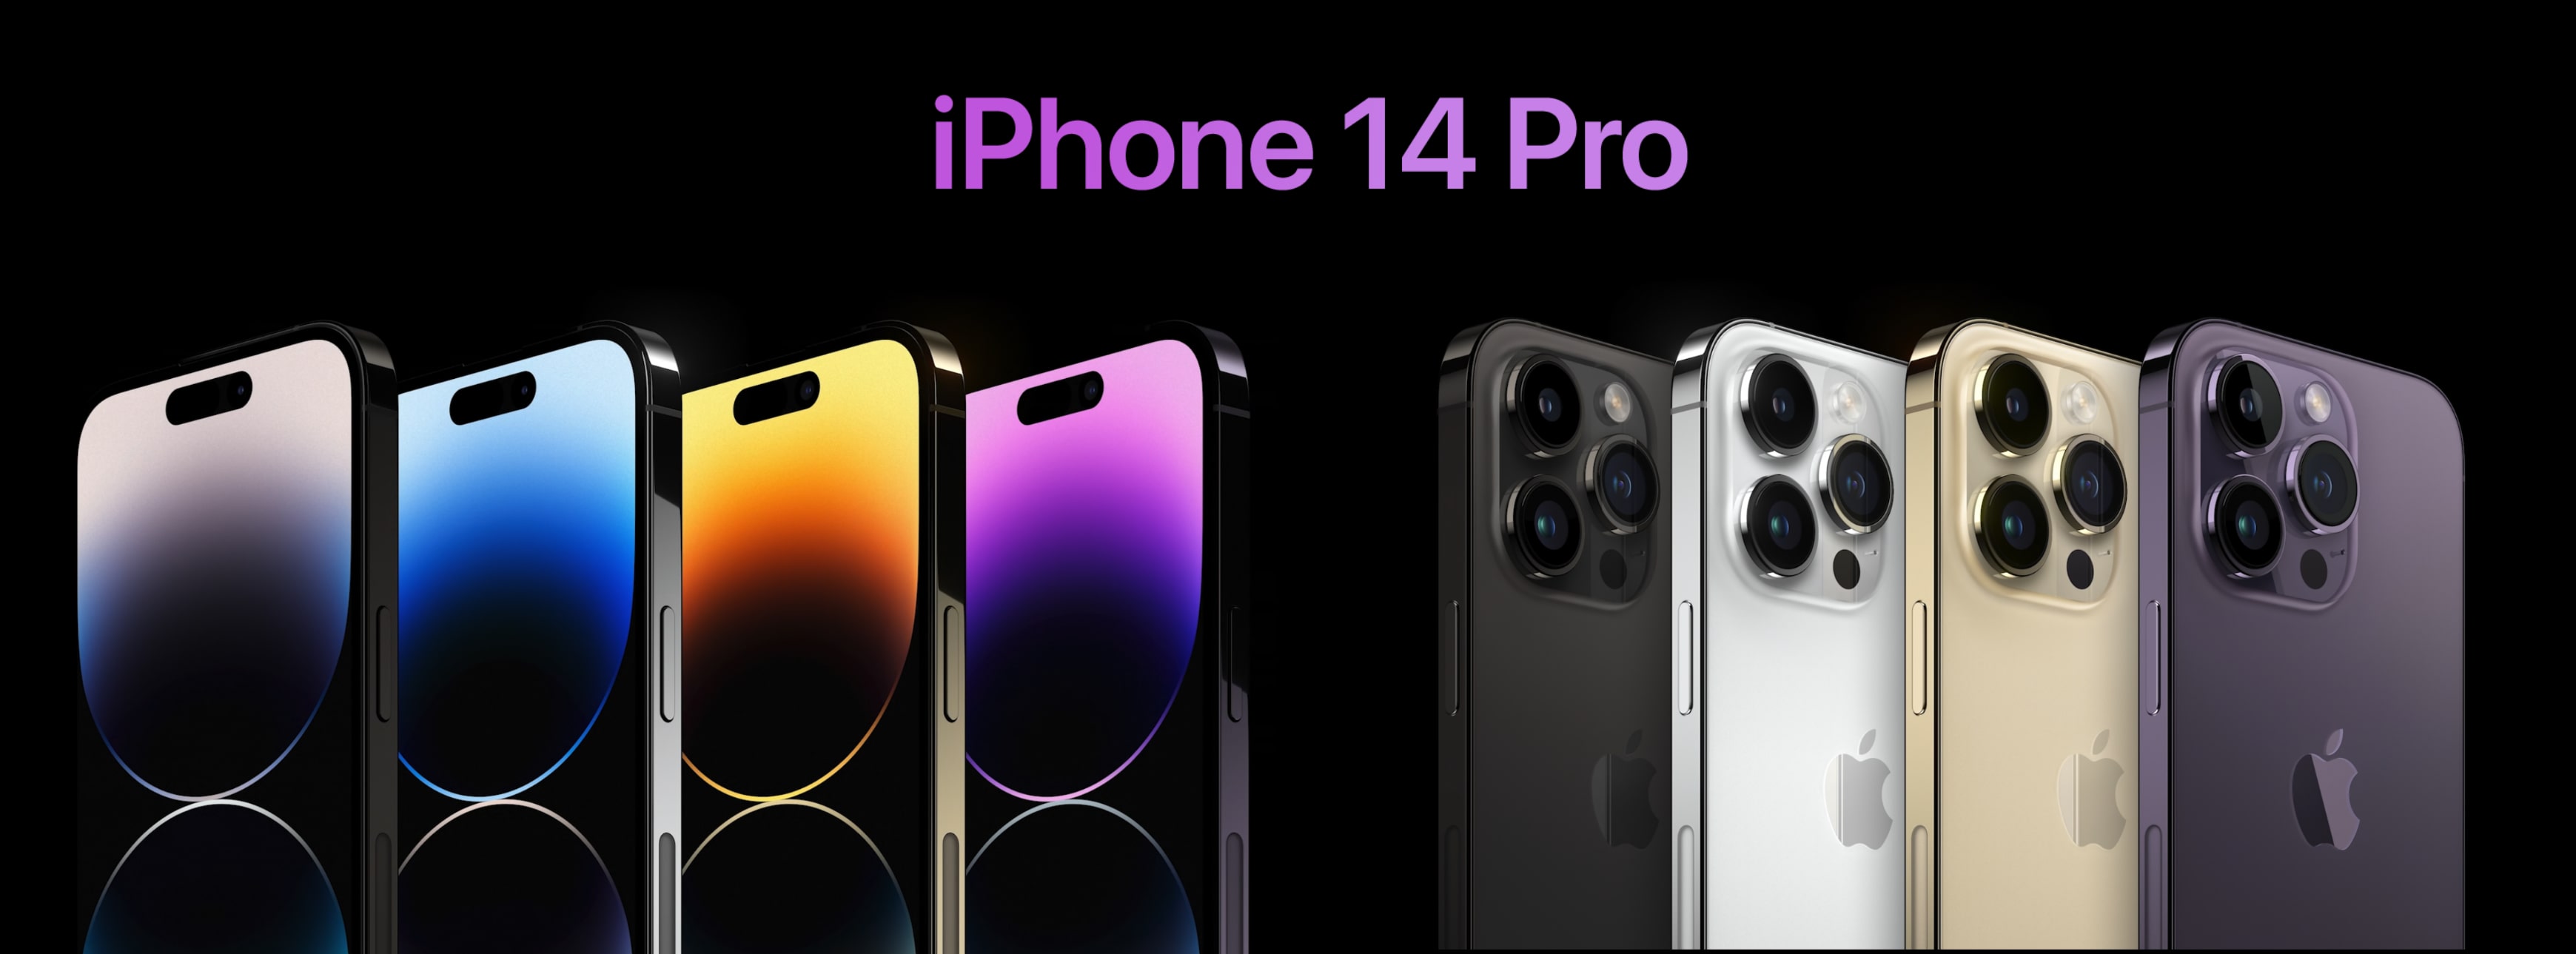 New iPhone 14 Pro Max